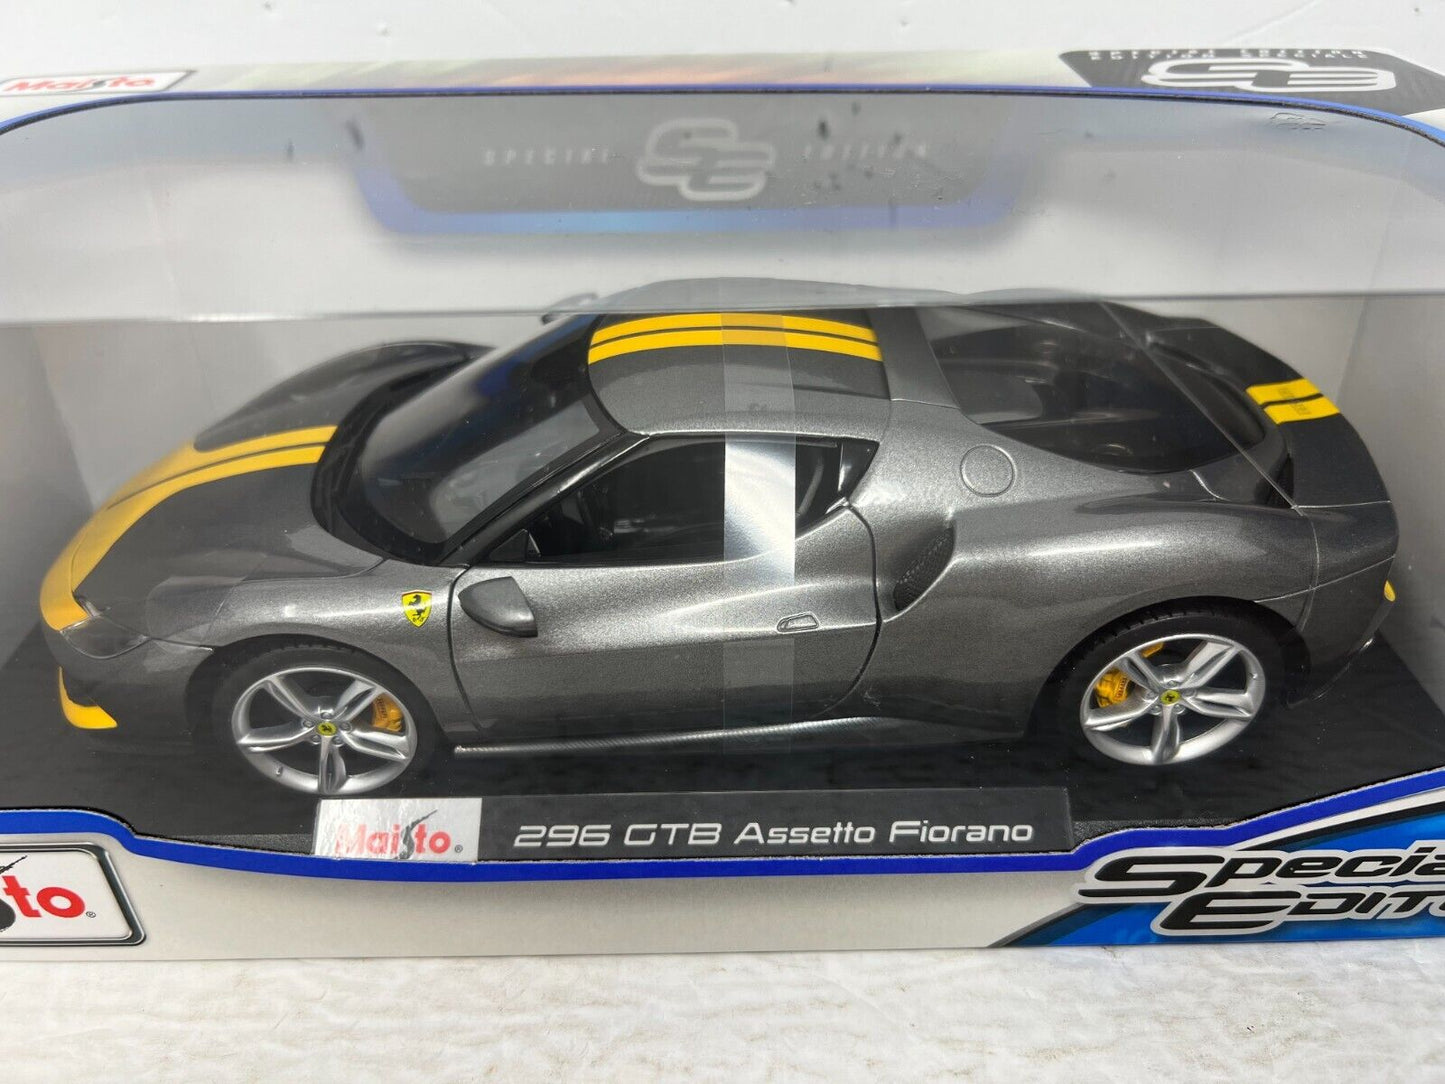 Maisto Ferrari GTB Assetto Fiorano Special Edition 1:18 Diecast